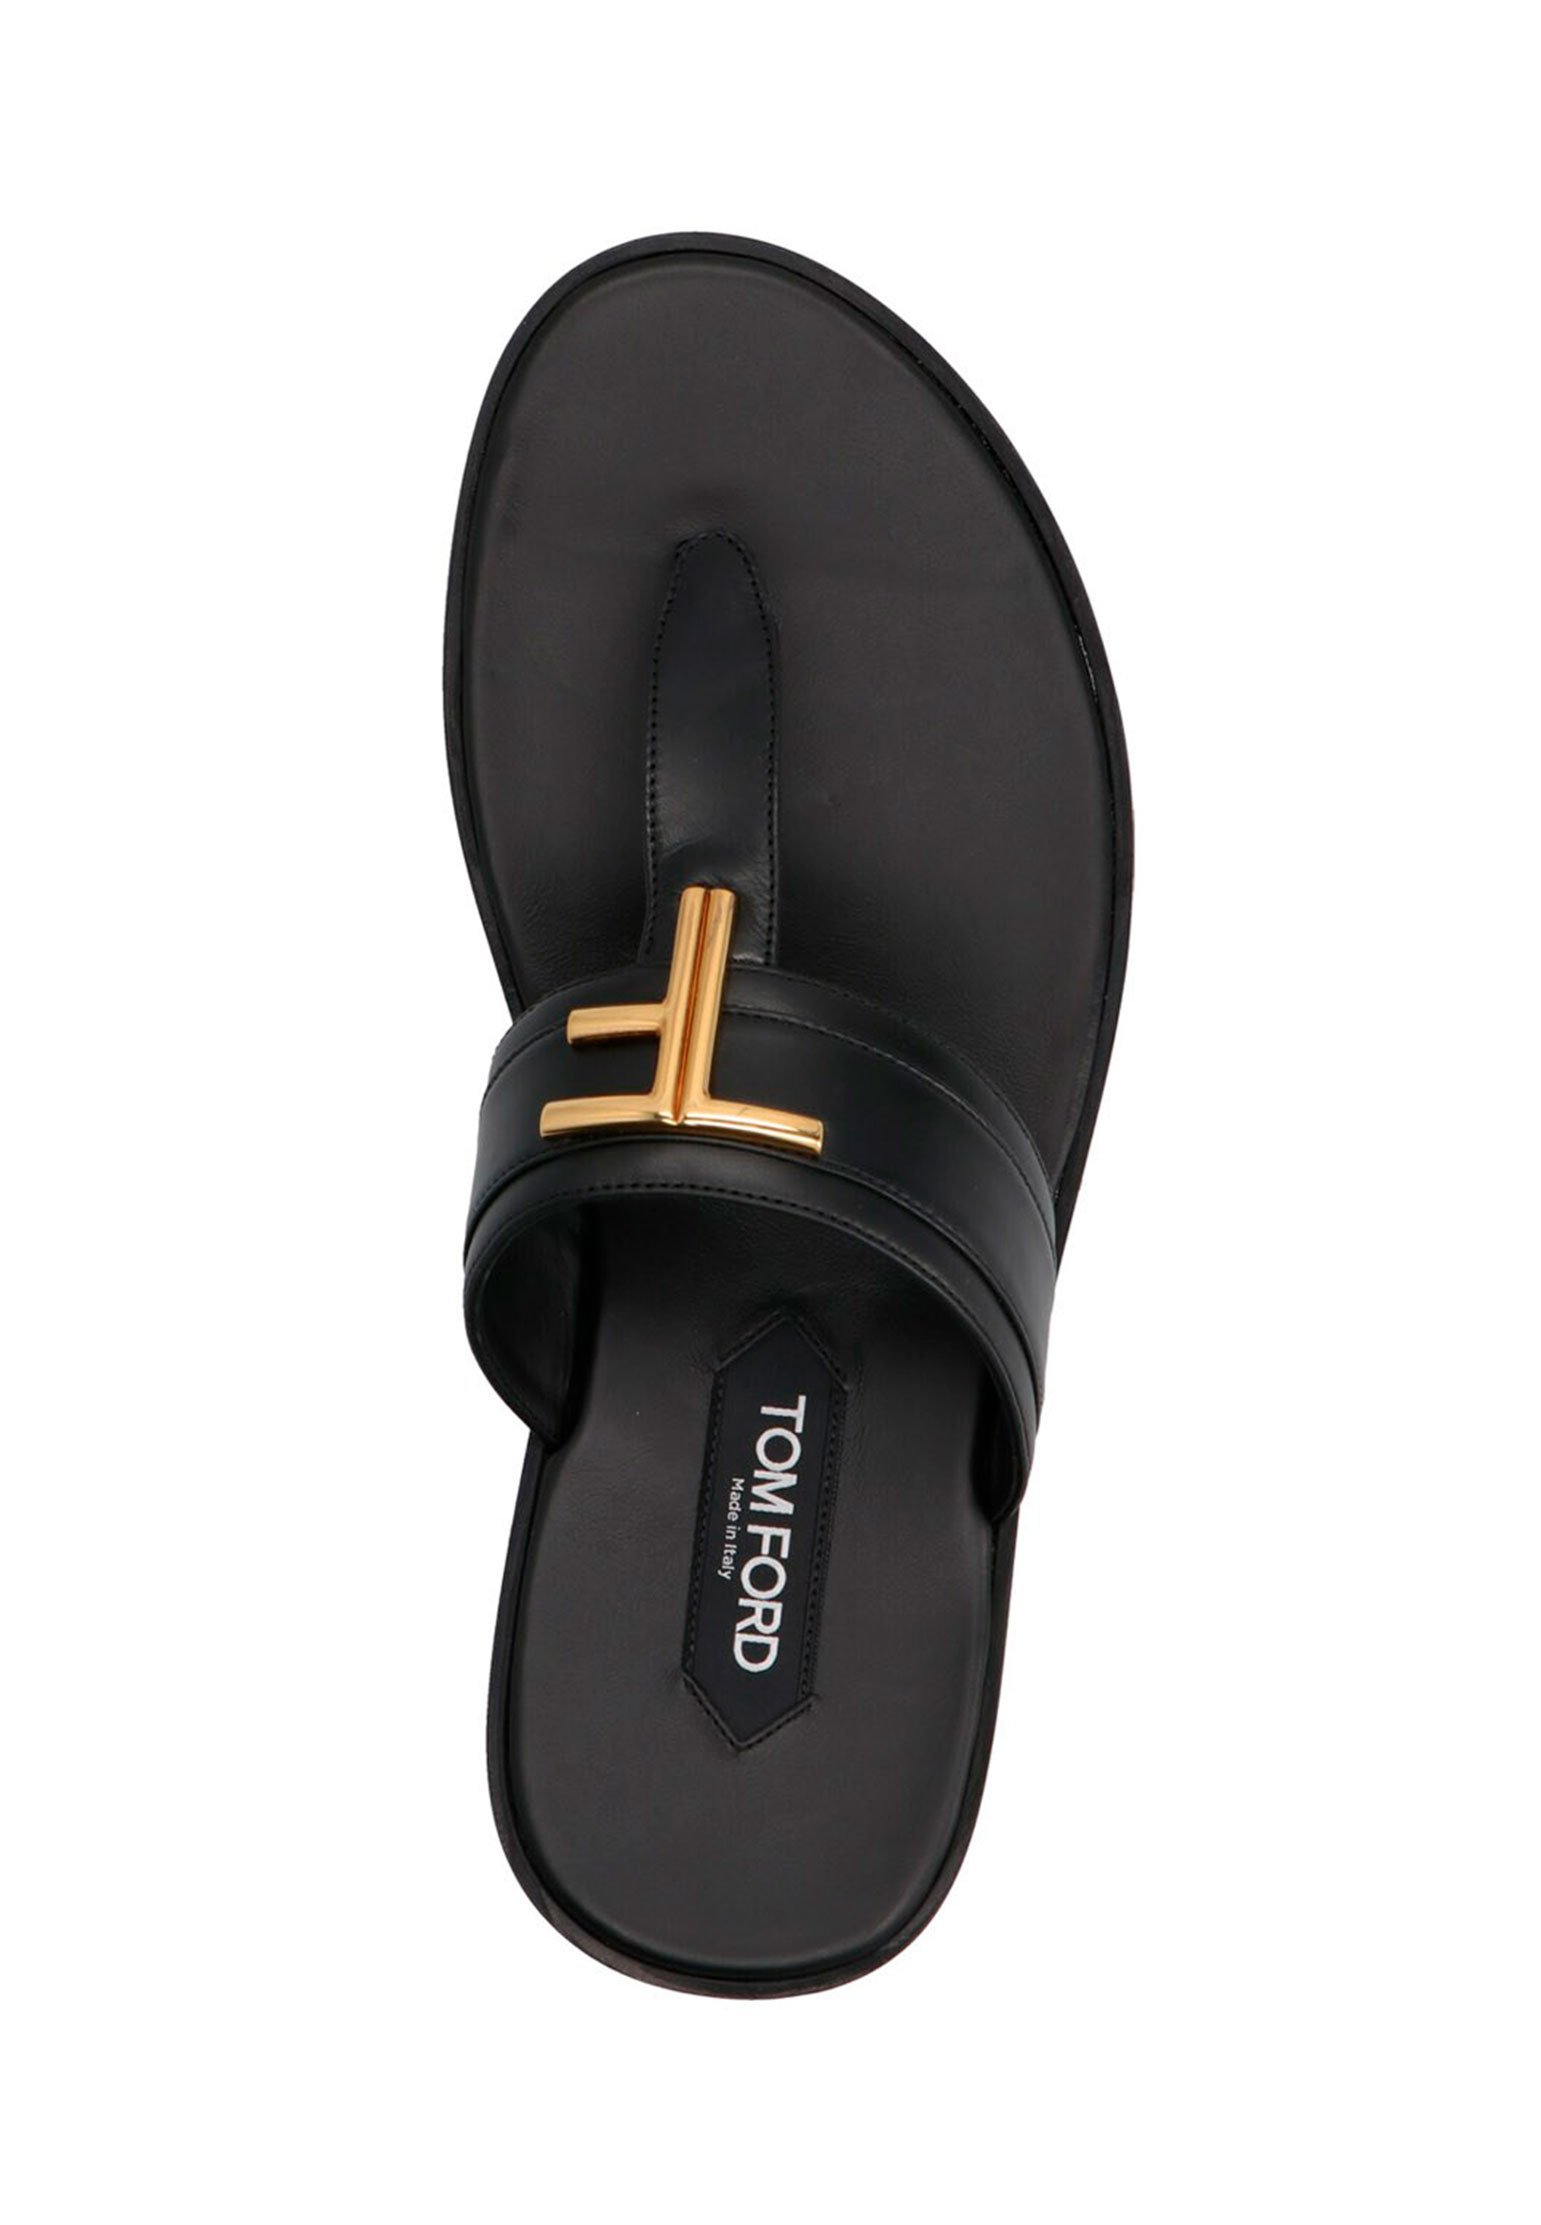 Sandals TOM FORD Color: black (Code: 1061) in online store Allure